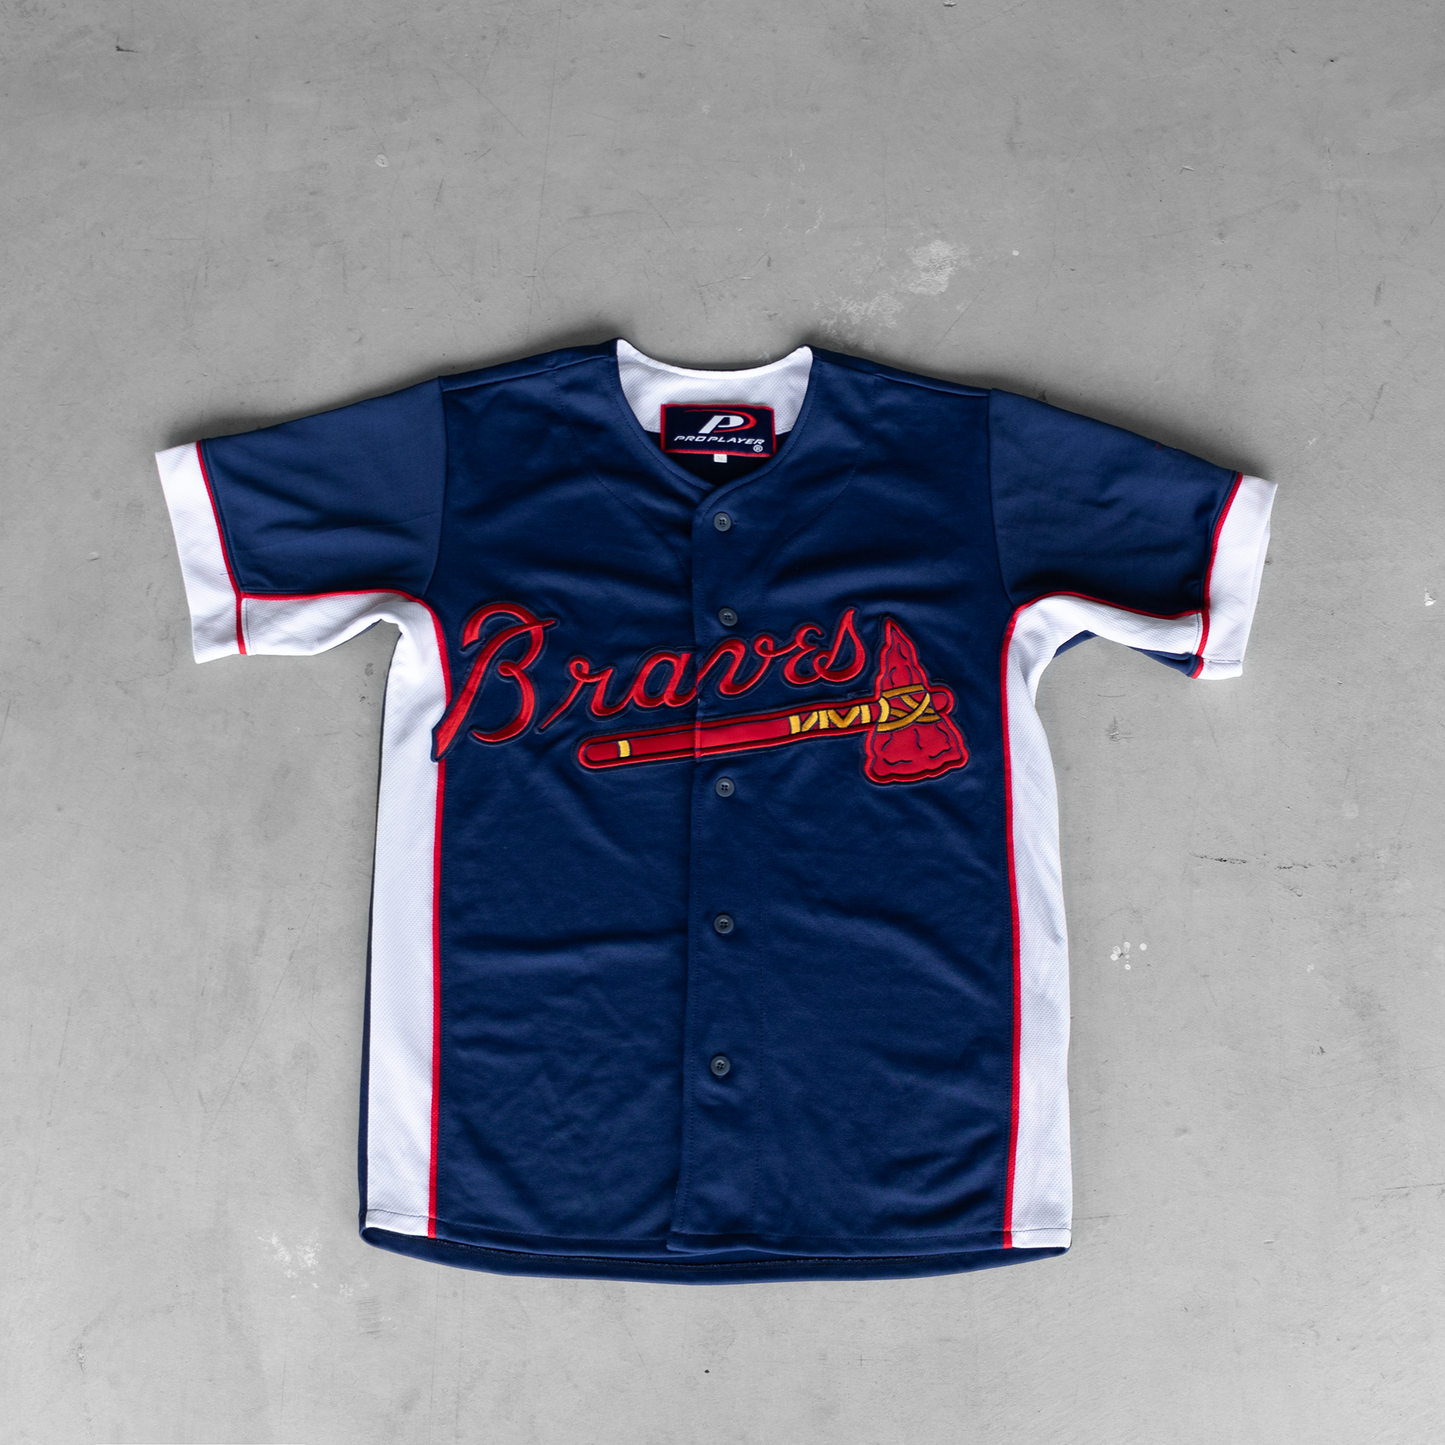 Vintage MLB Pro Player Atlanta Braves Baseball Jersey (M)